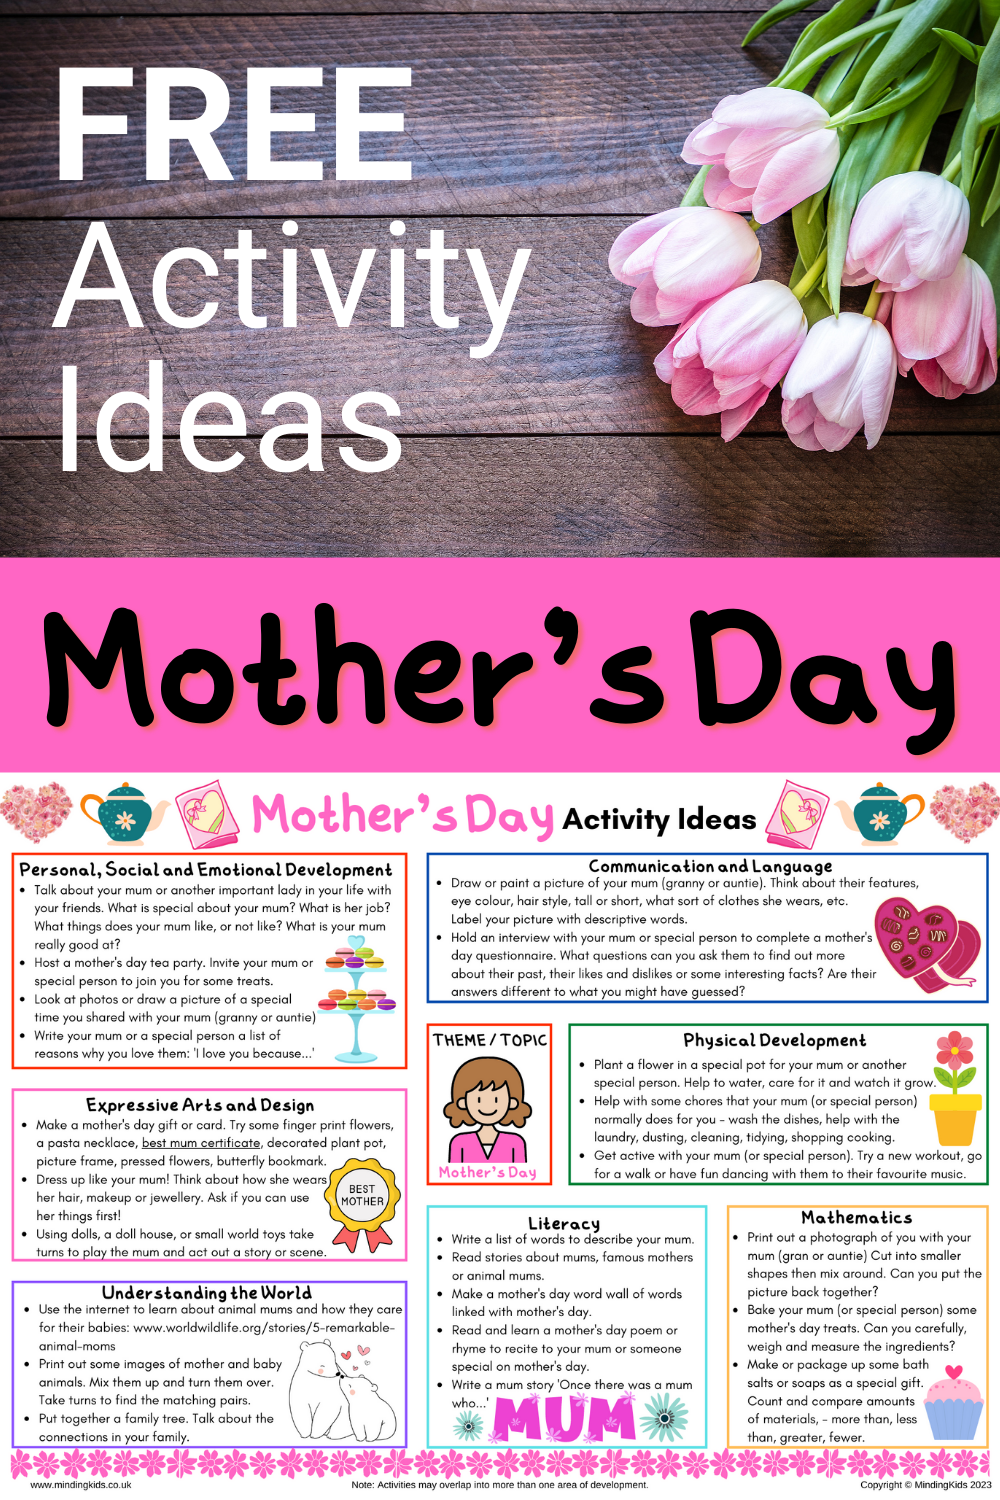 Mother's Day Activity Ideas - PINTEREST - MindingKids